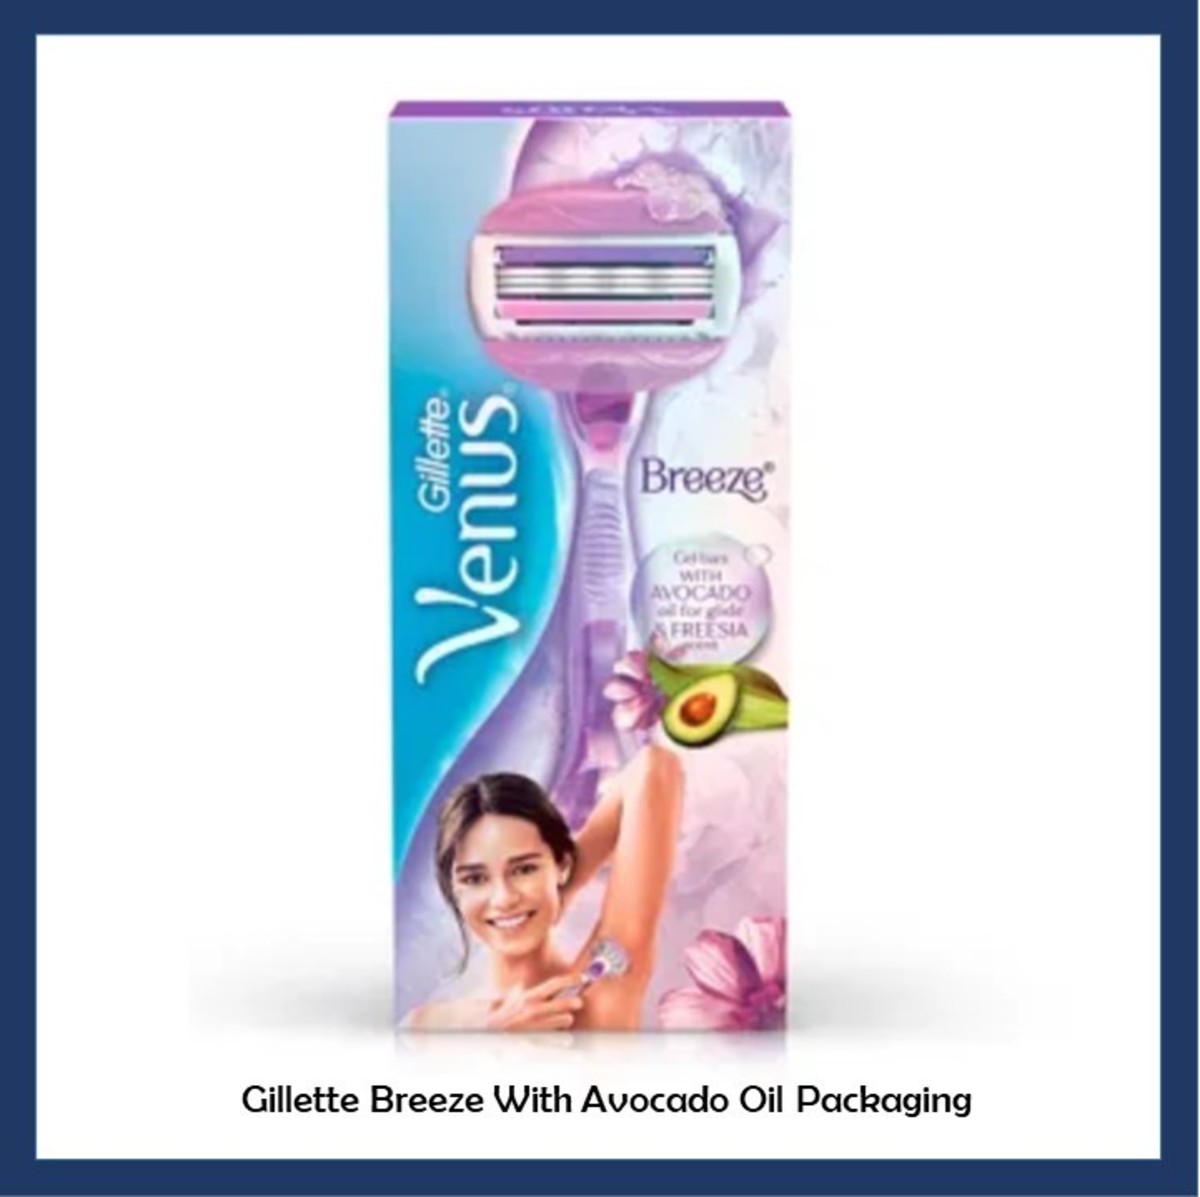 Gillette Venus Breeze Packaging